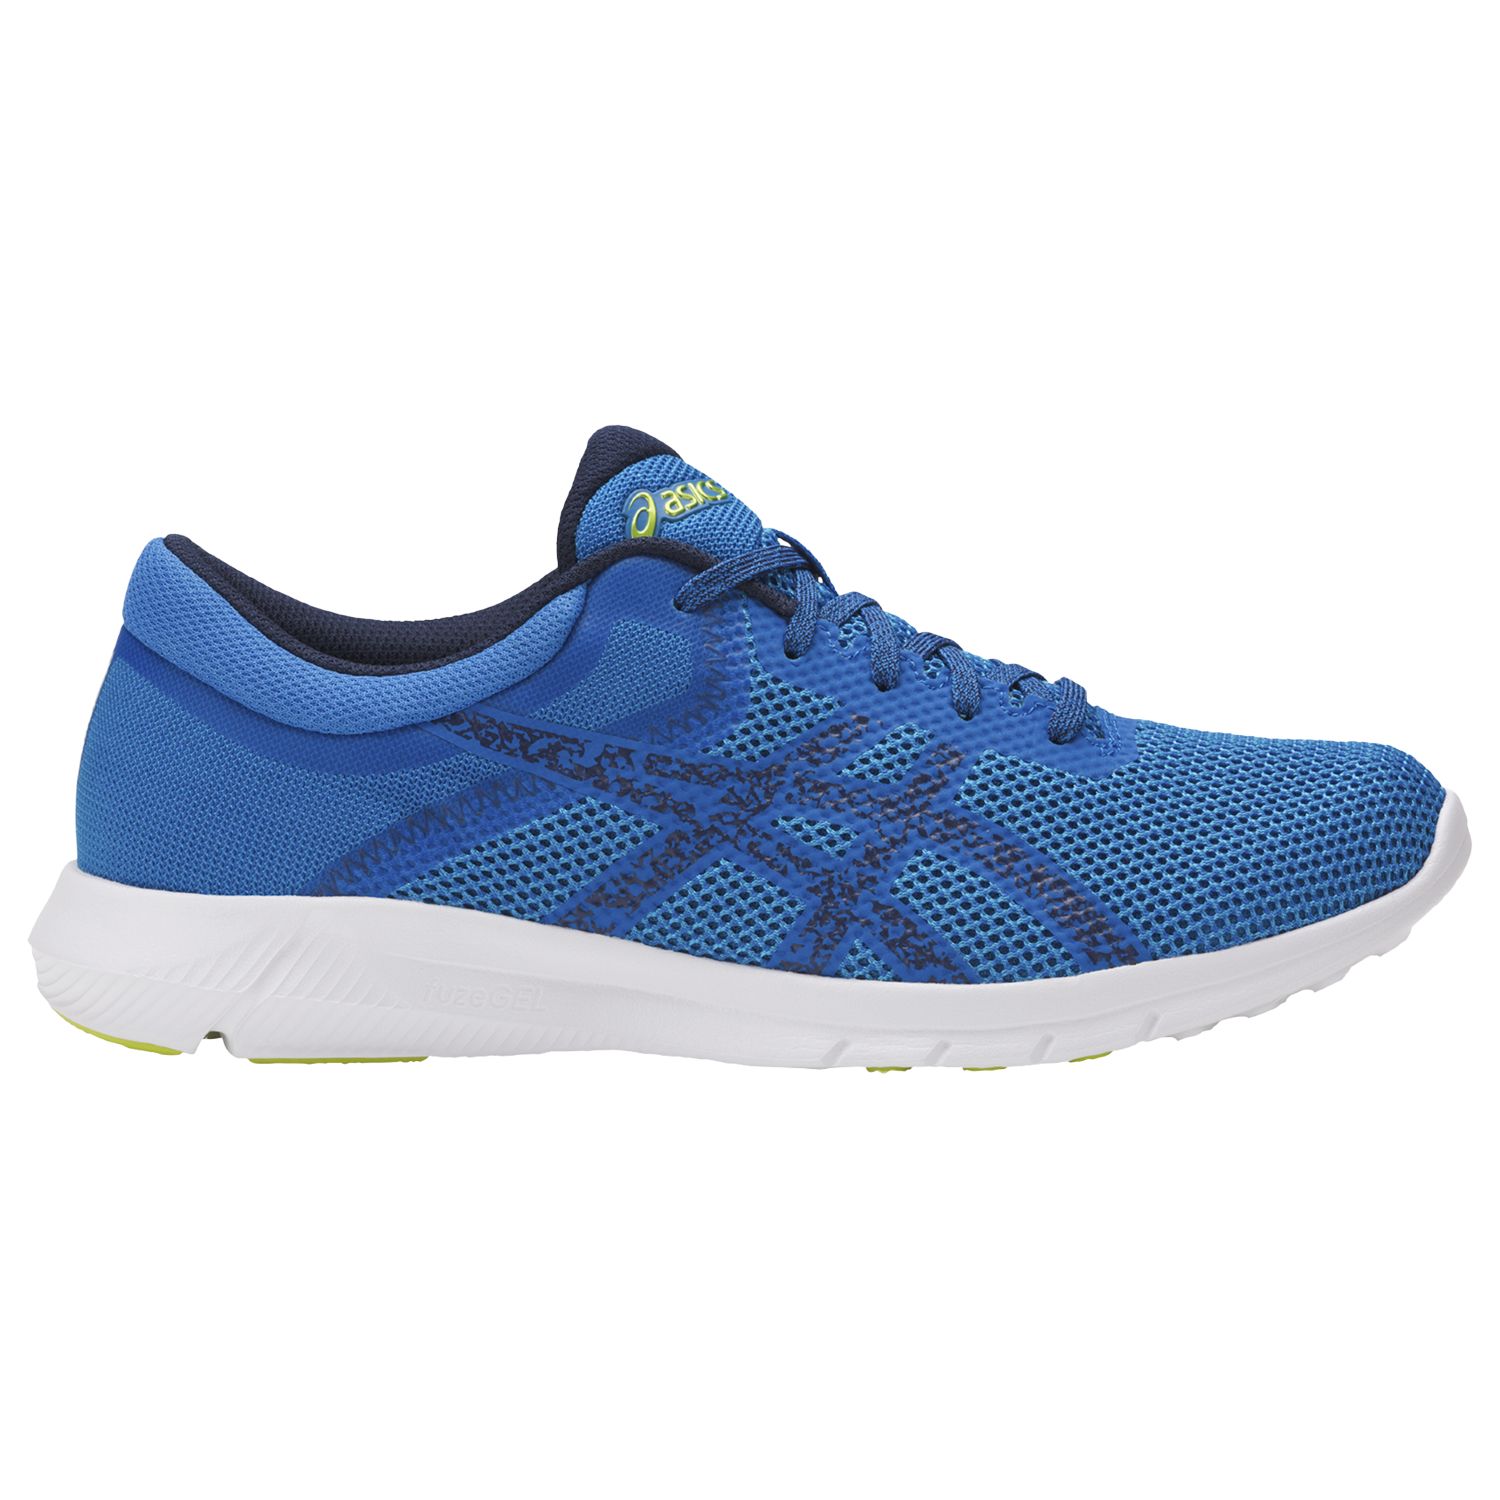 Asics NitroFuze 2 Men's Running Shoes, Blue, 11